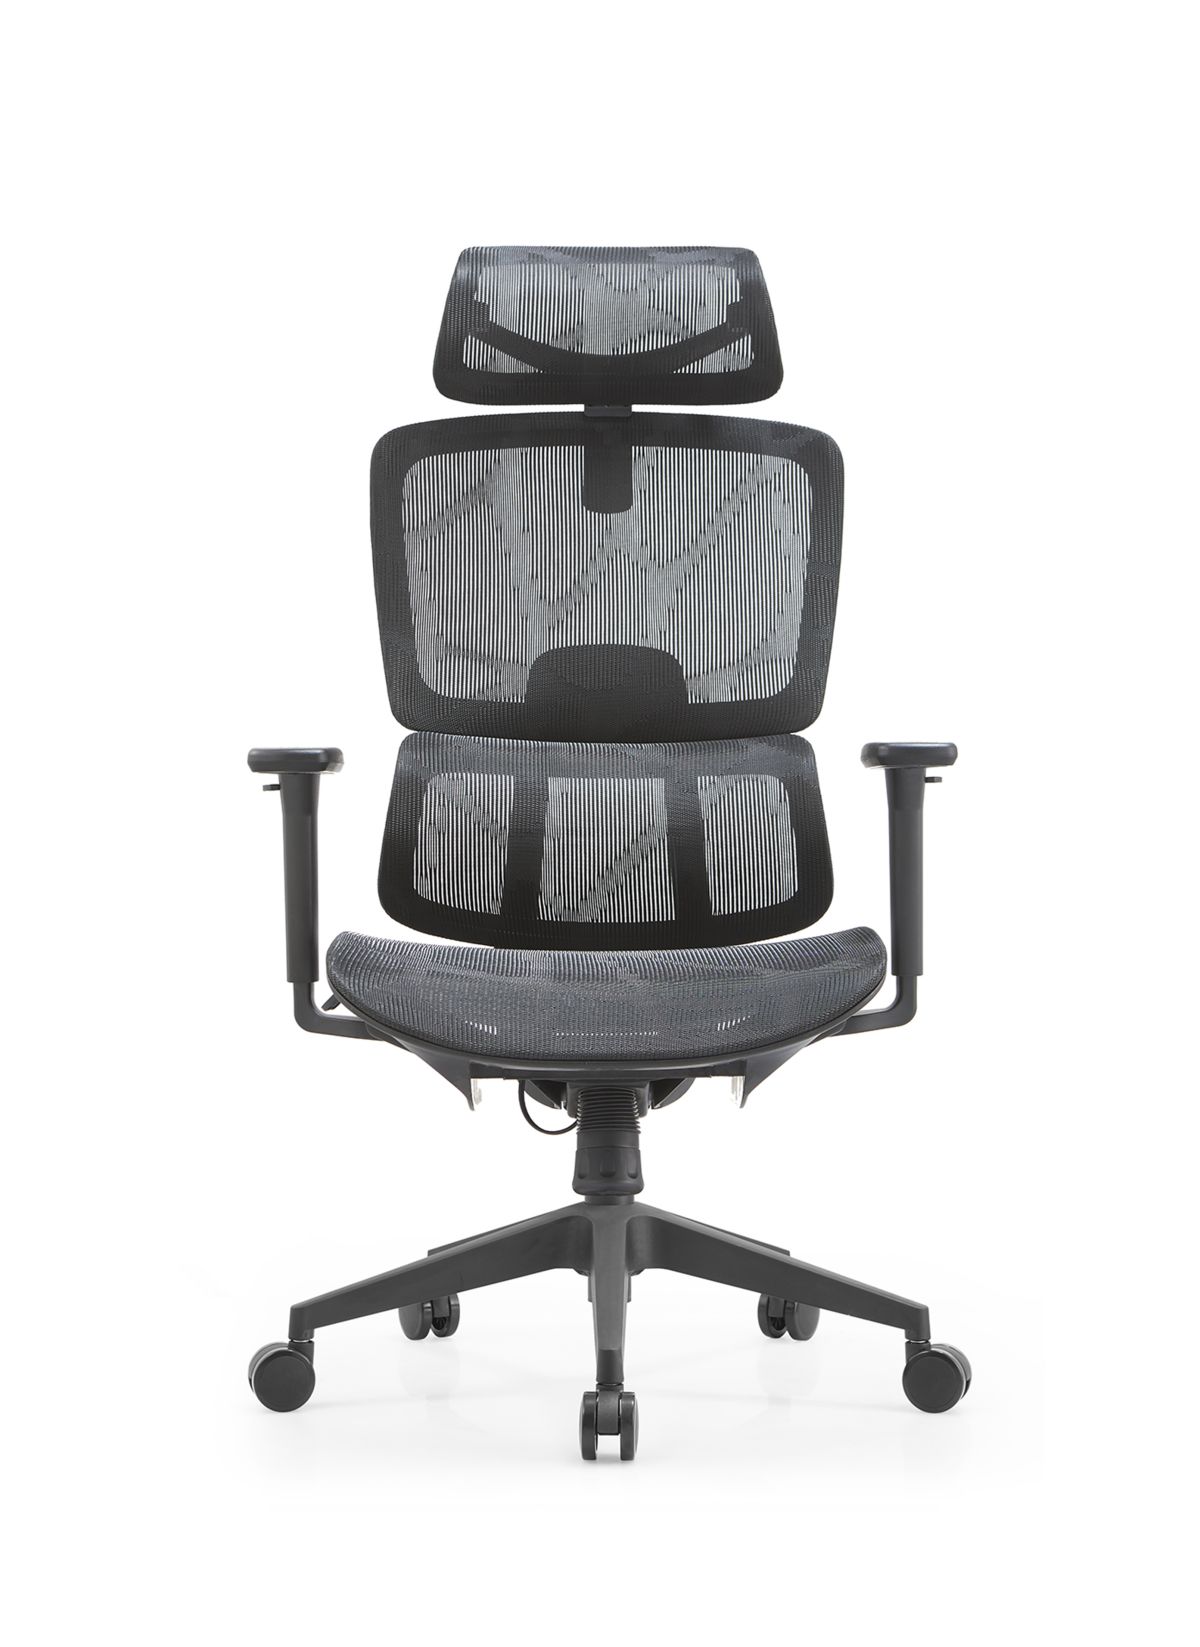 Chaise ergonomique Herman Miller (1)